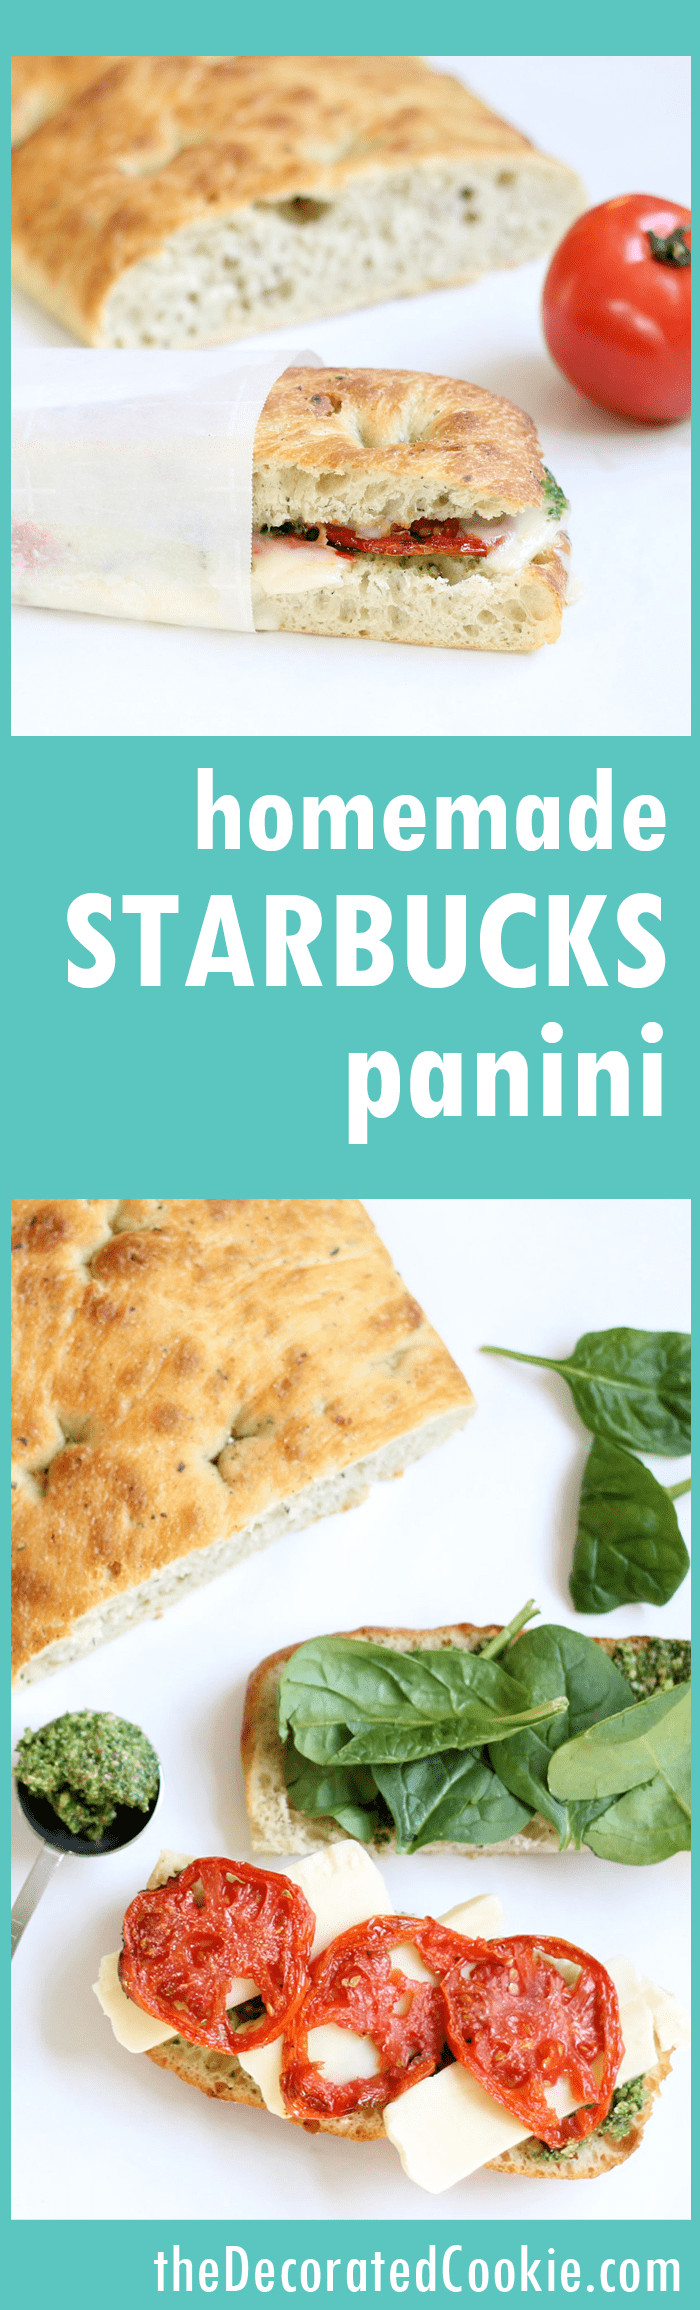 Starbucks Tomato Mozzarella Panini Recipe
 homemade Starbucks panini with tomatoes pesto spinach